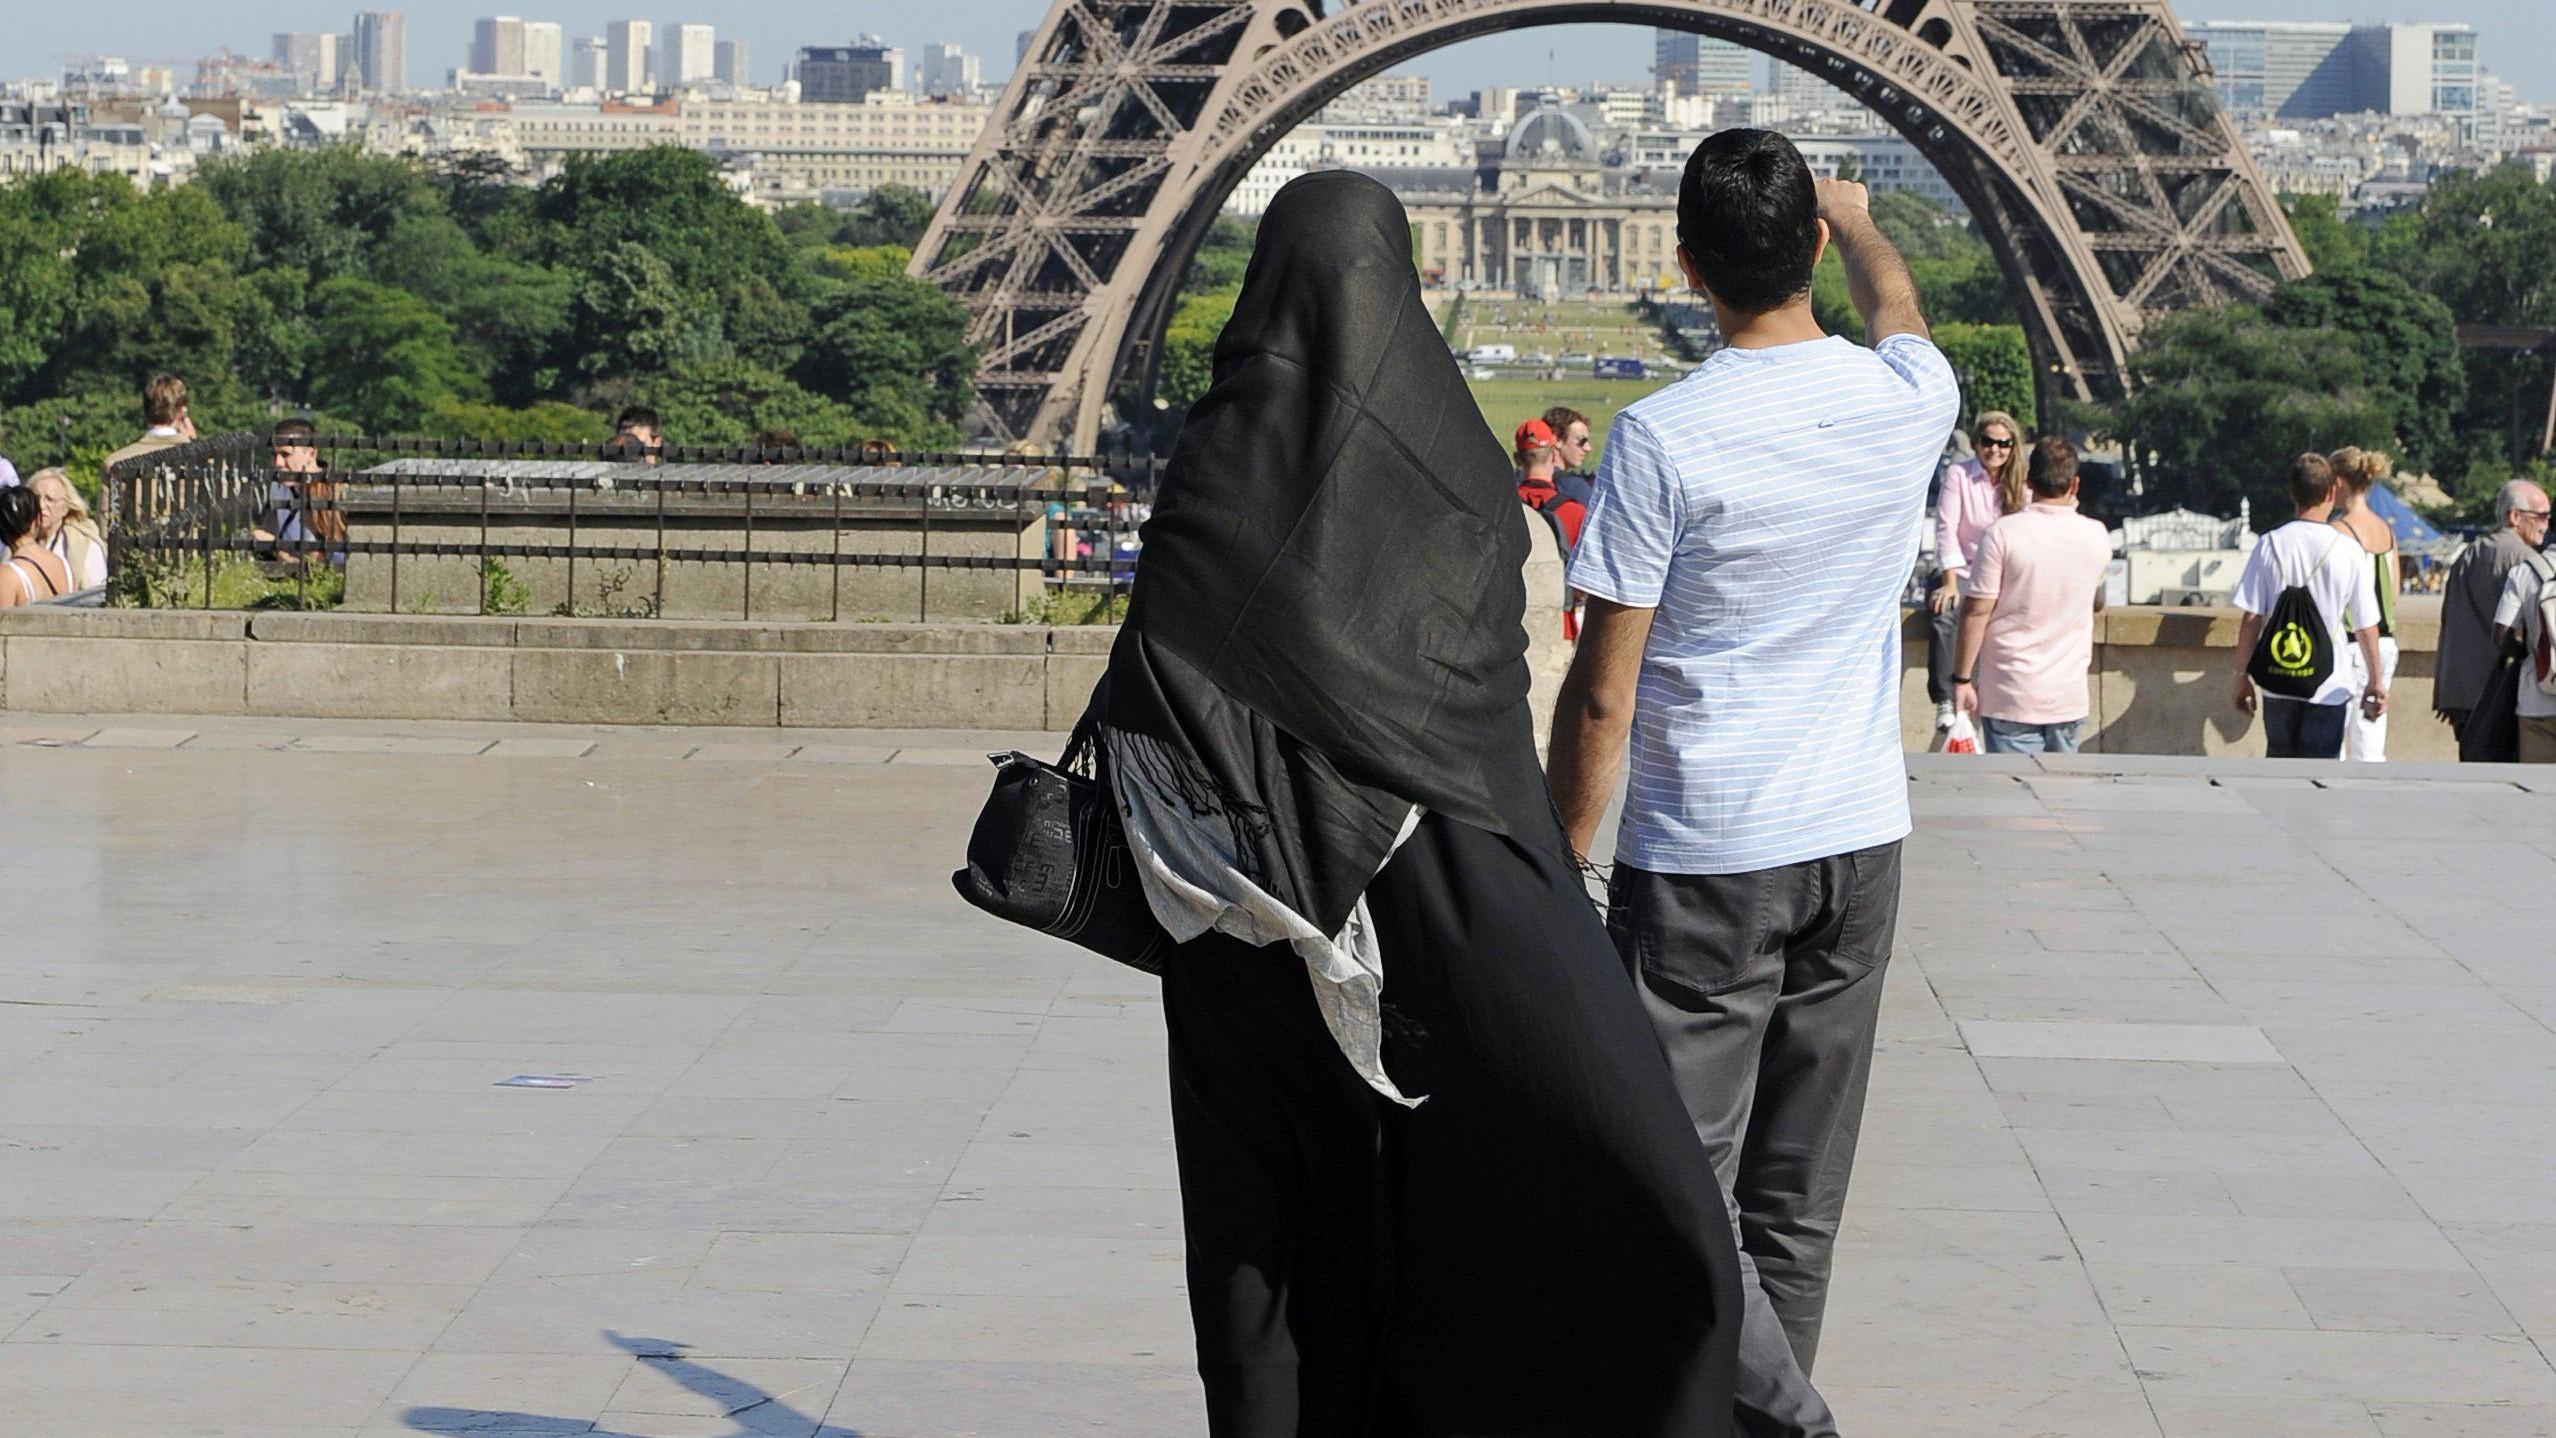 Paris pledges crackdown on pupils in Islamic dress